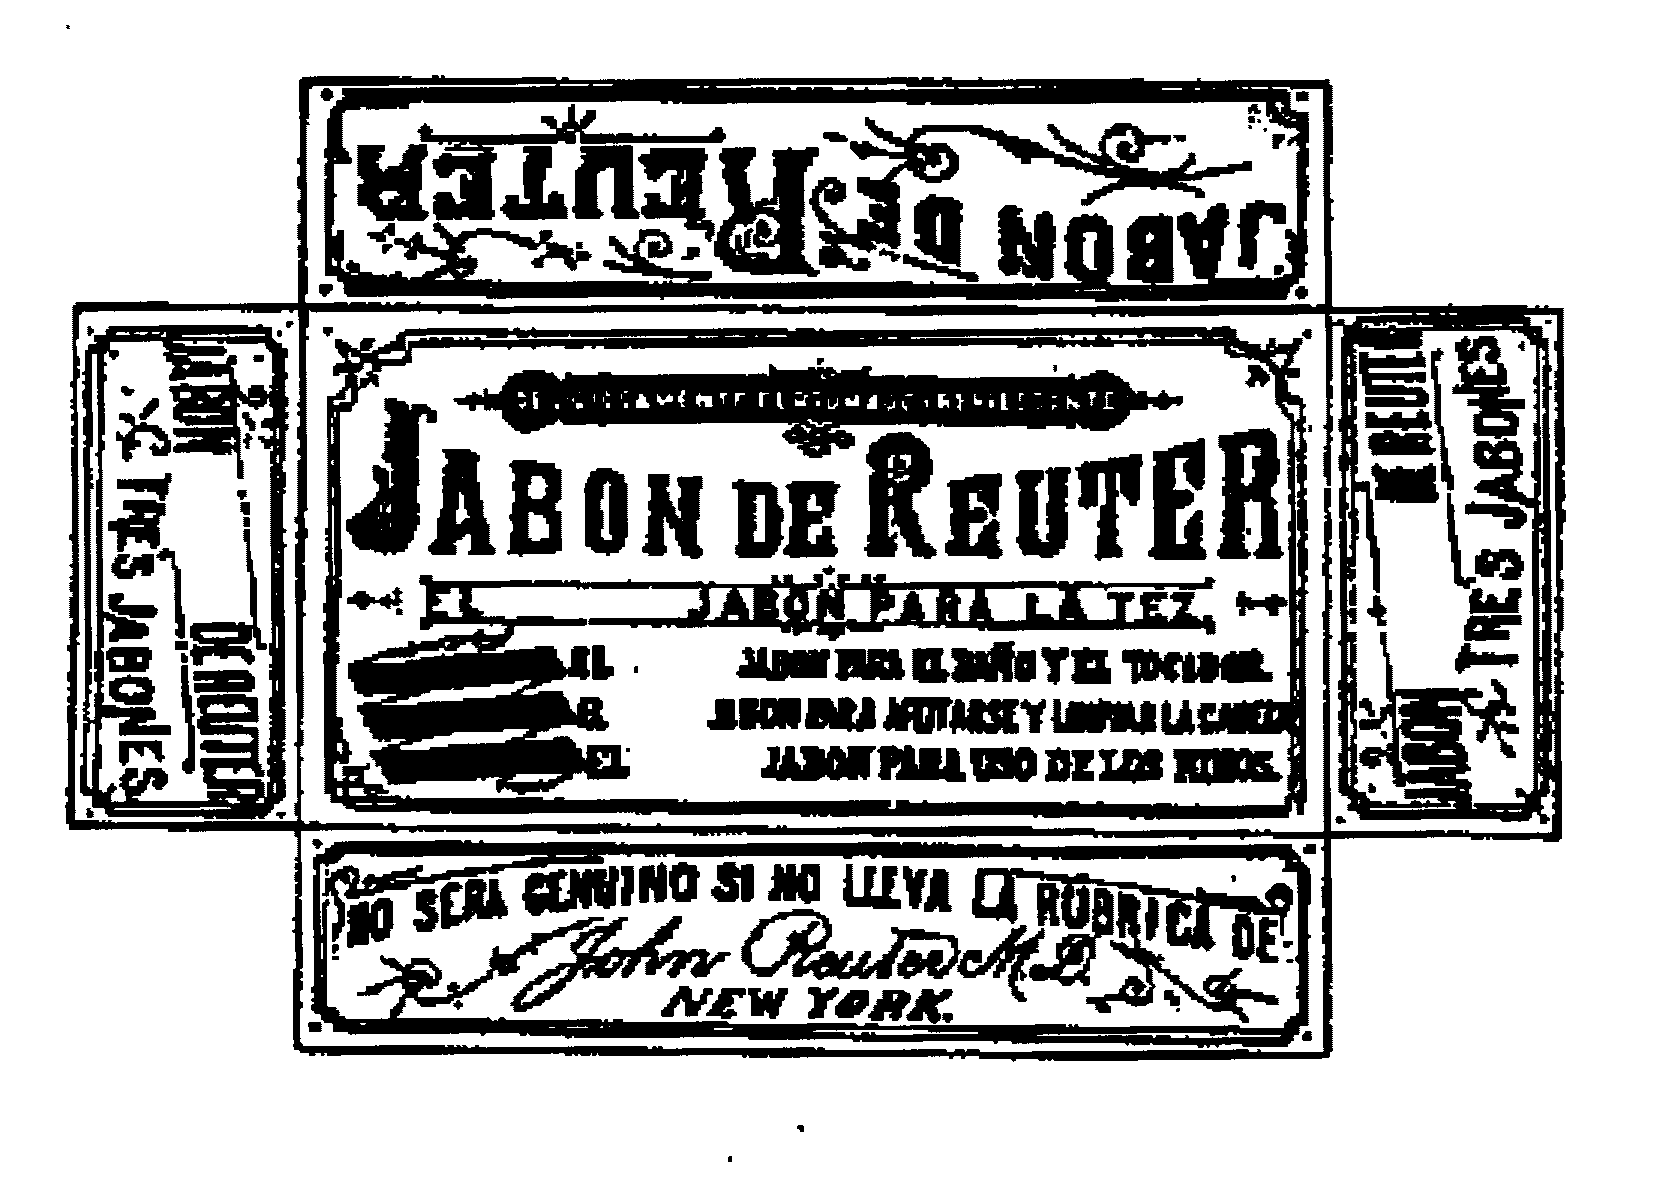  JABON DE REUTER TRES JABONES NO SERA GENUINO SI NO LLEUA LA RUBRICA DE JOHN REUTER M.D. NEW YORK DELICIOSAMENTE PERFUMADO REFRES